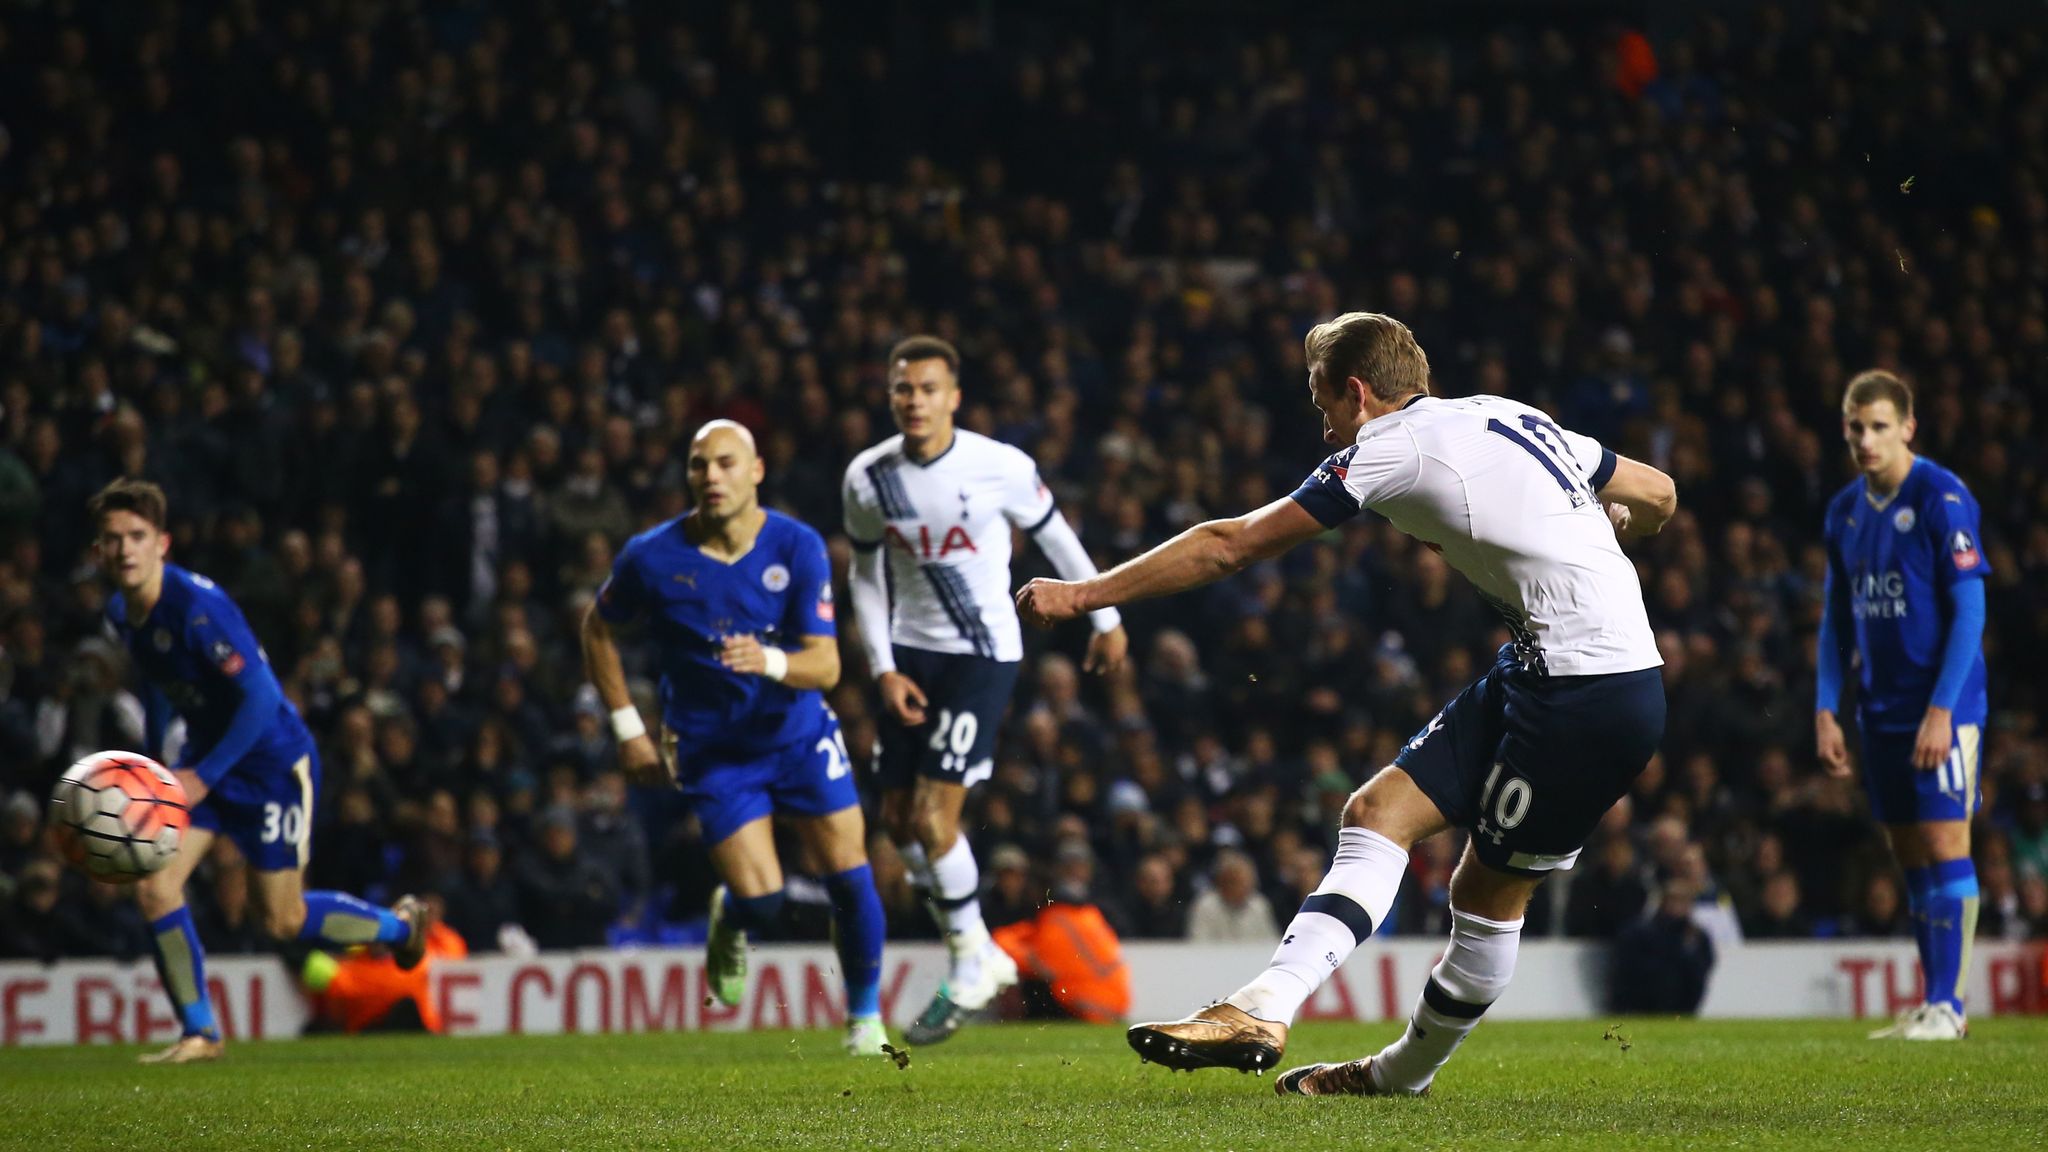 Nacer Chadli upbeat despite poor Tottenham start, Football News